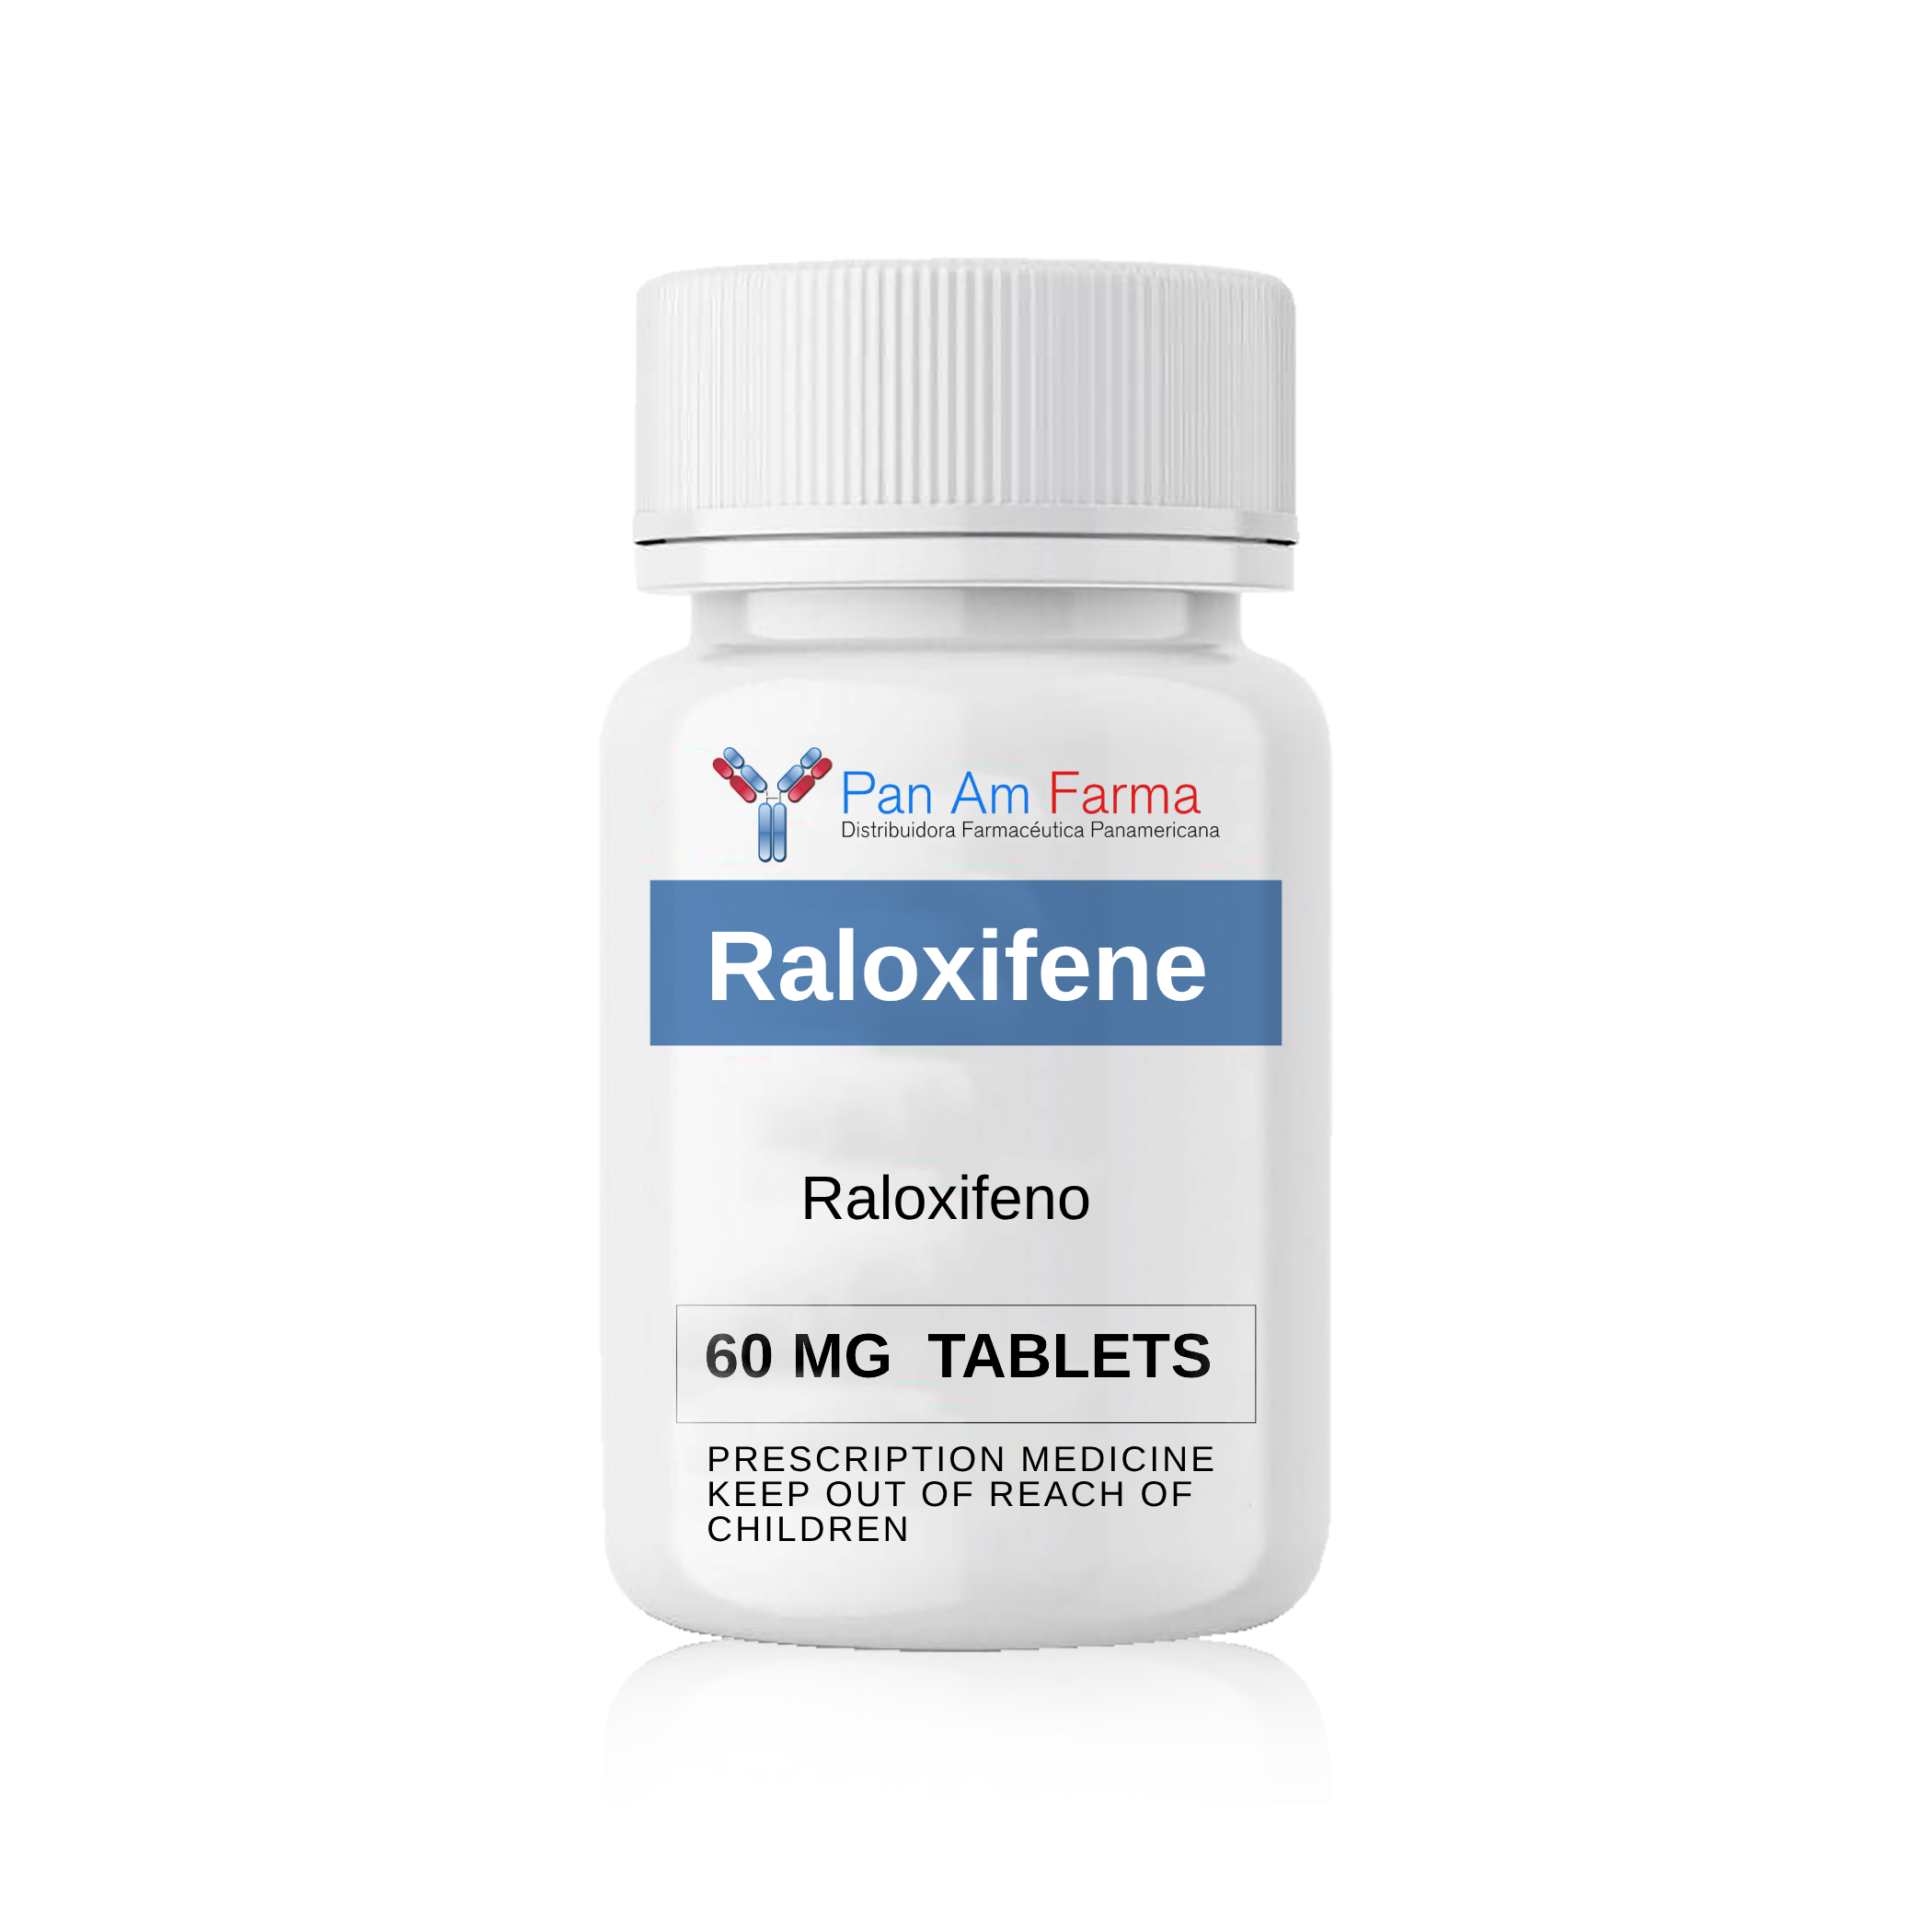 Raloxifene / Raloxifeno